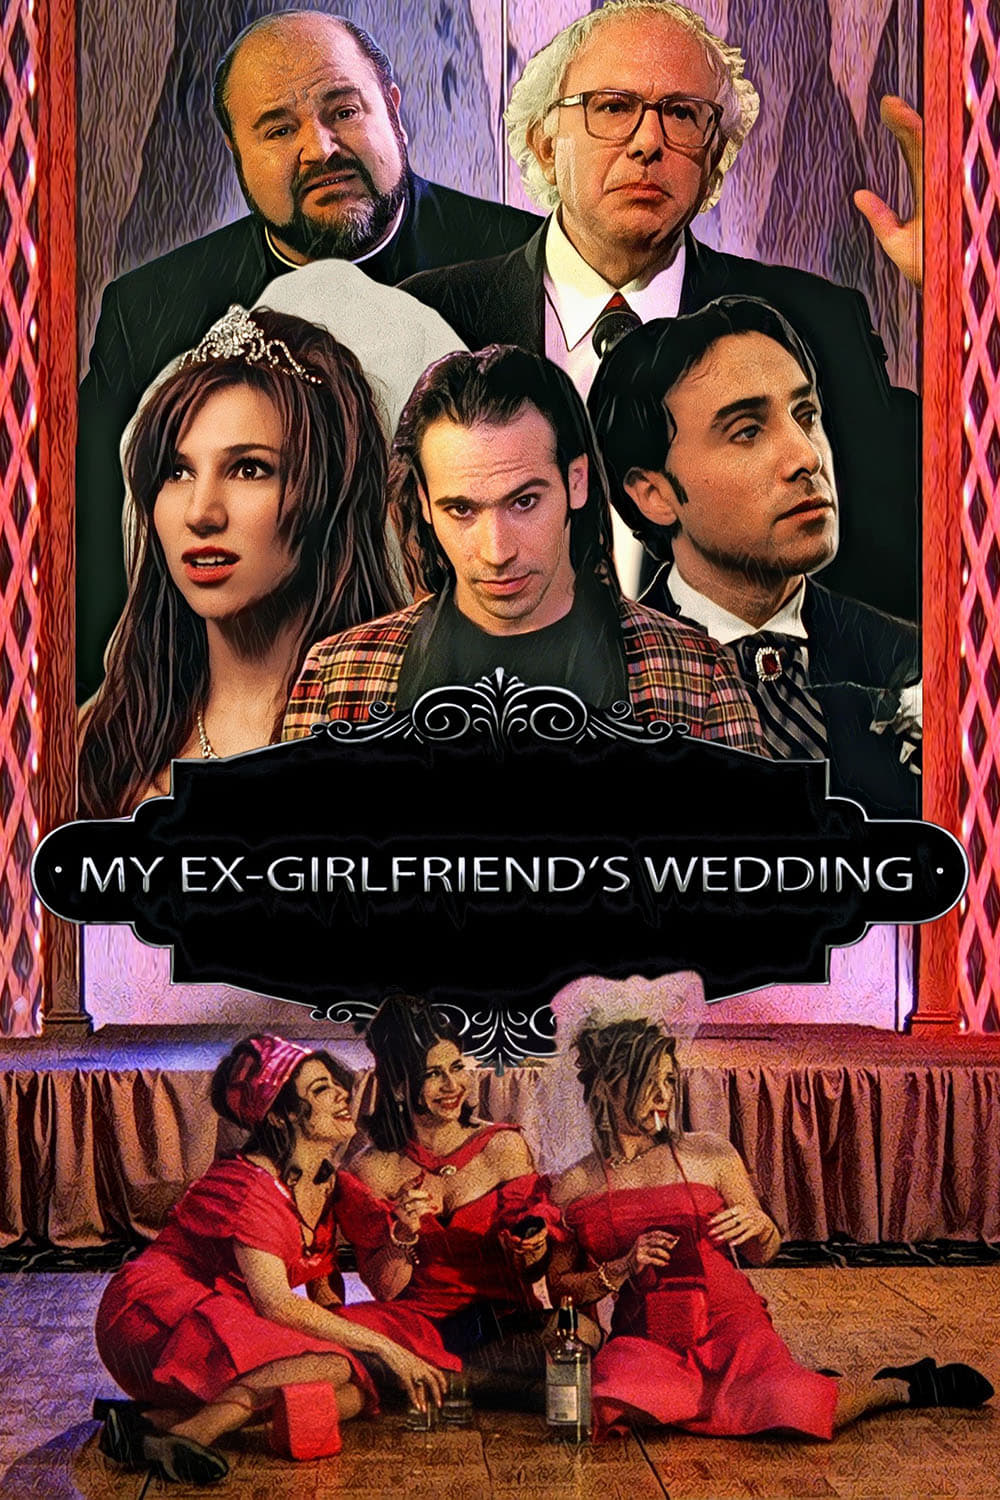 My X-Girlfriend's Wedding Reception (1999)